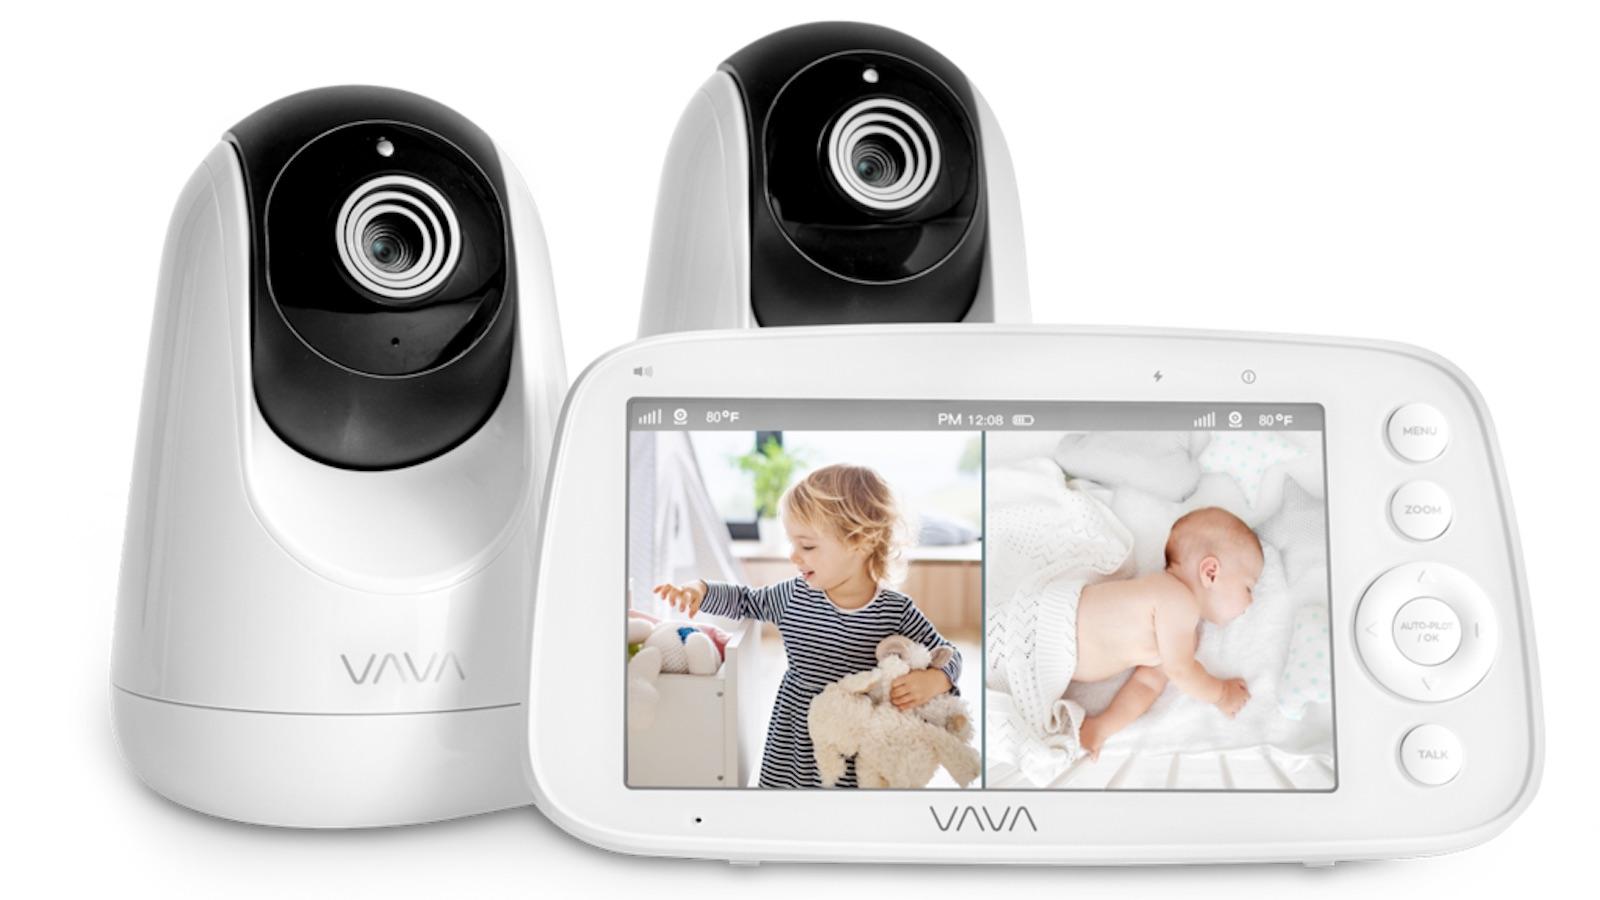  VAVA split screen baby monitor - Best for siblings